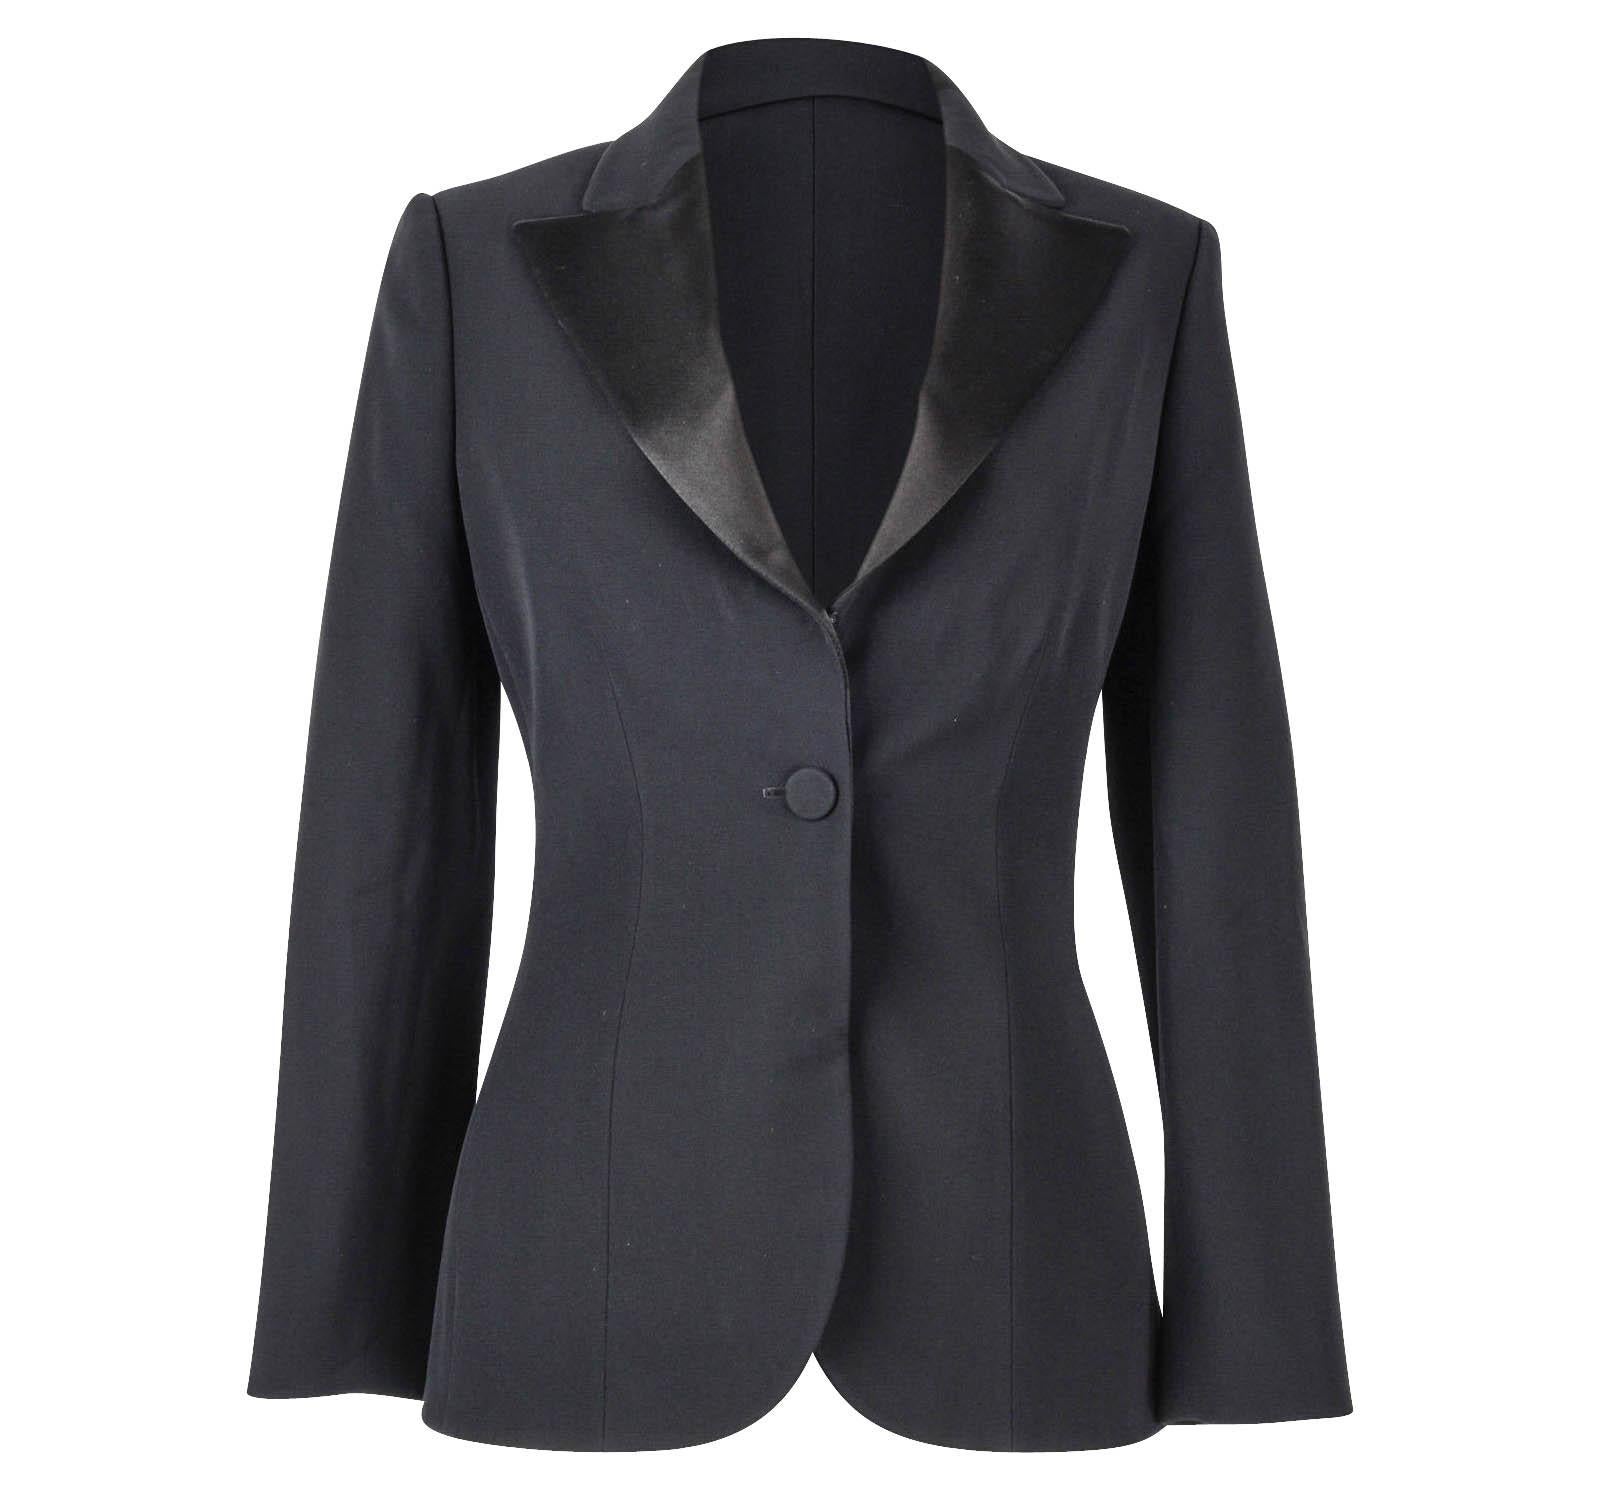 Women's Christian Dior Jacket Classic Tuxedo Black fits 6 to 8 New